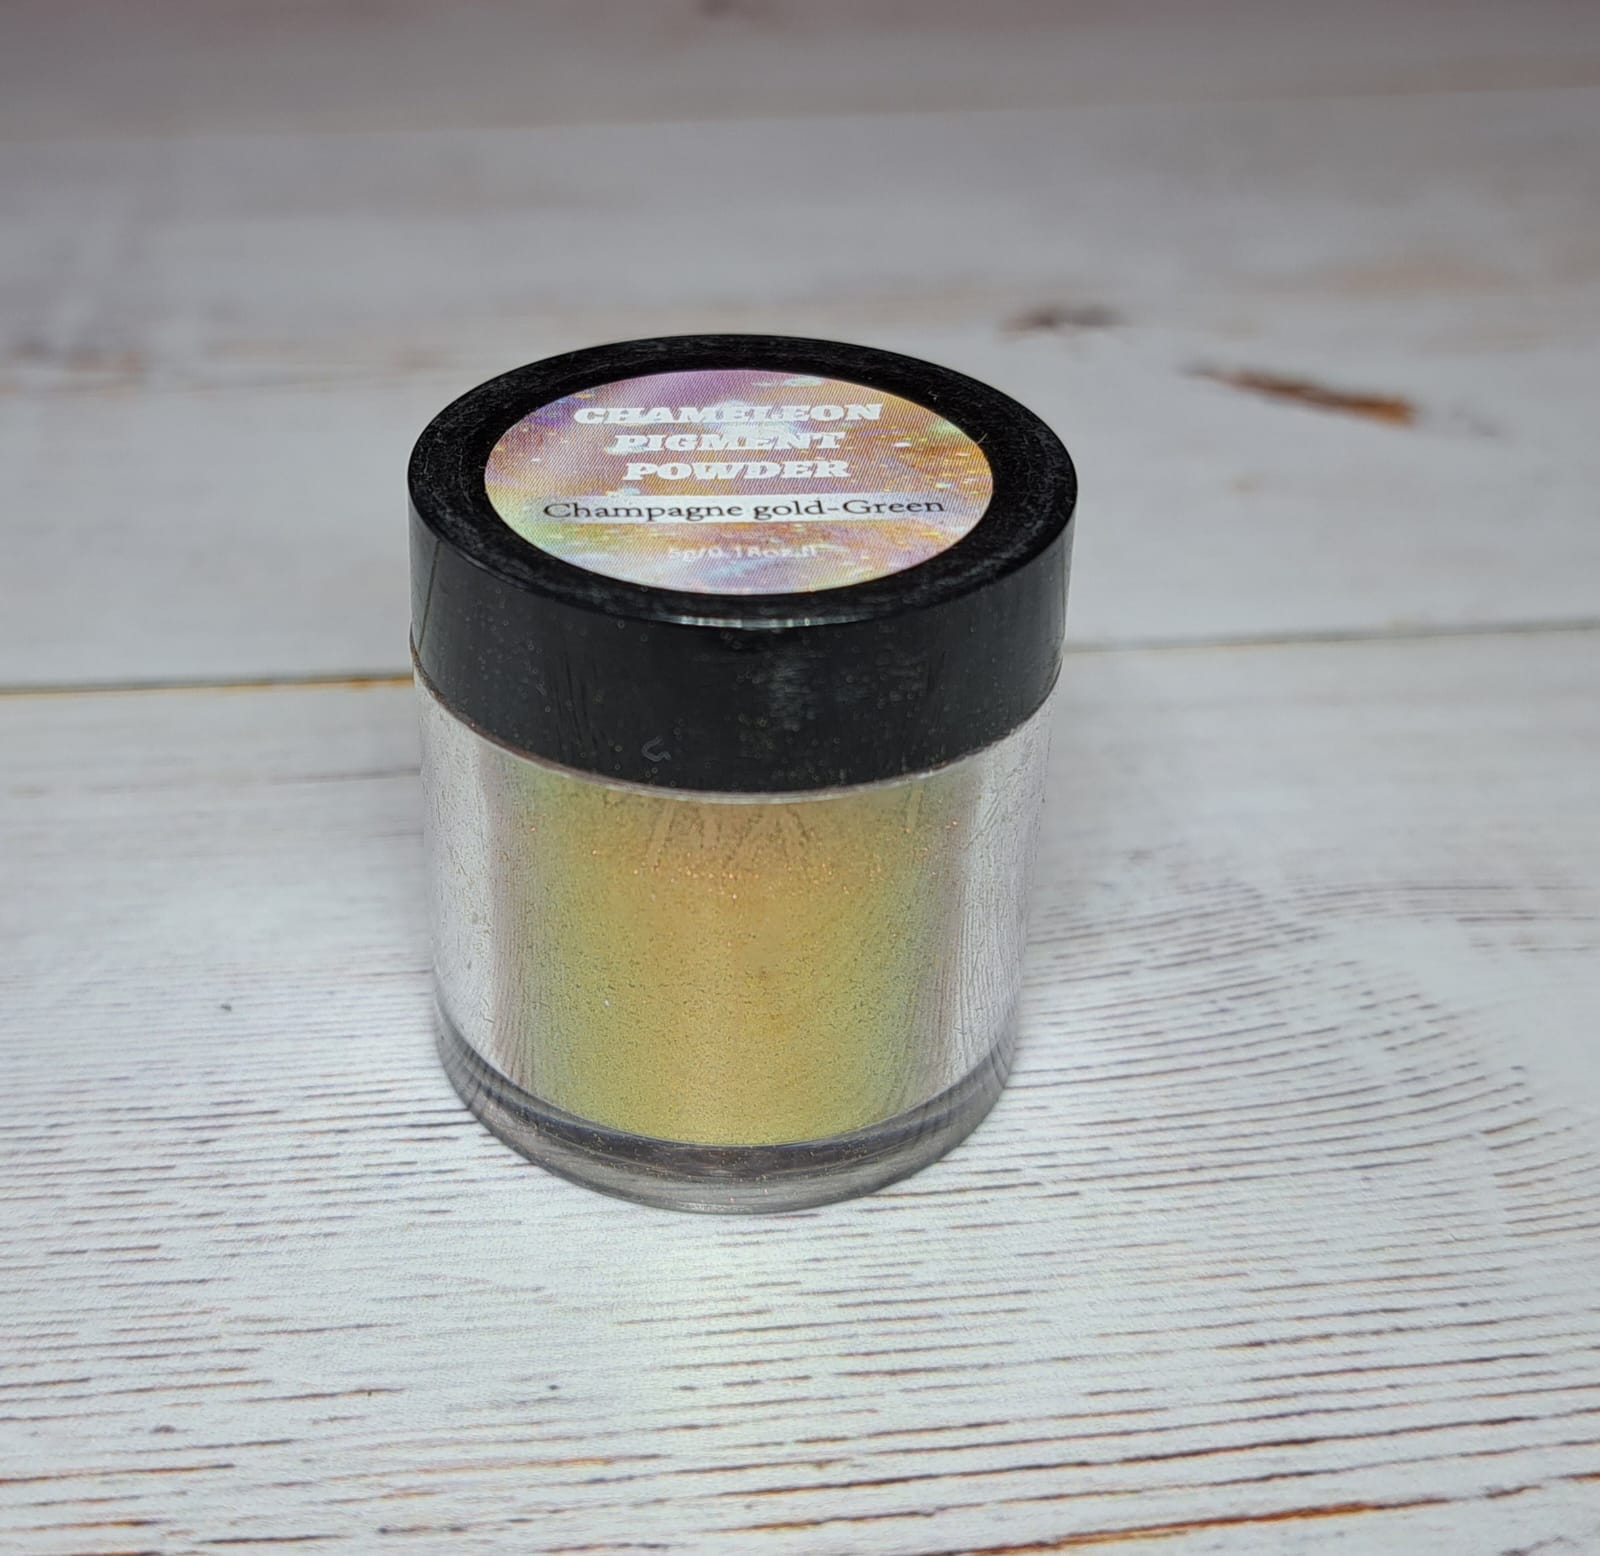 Chameleon Pigment Powders - 5 grams - Champagne gold - Green